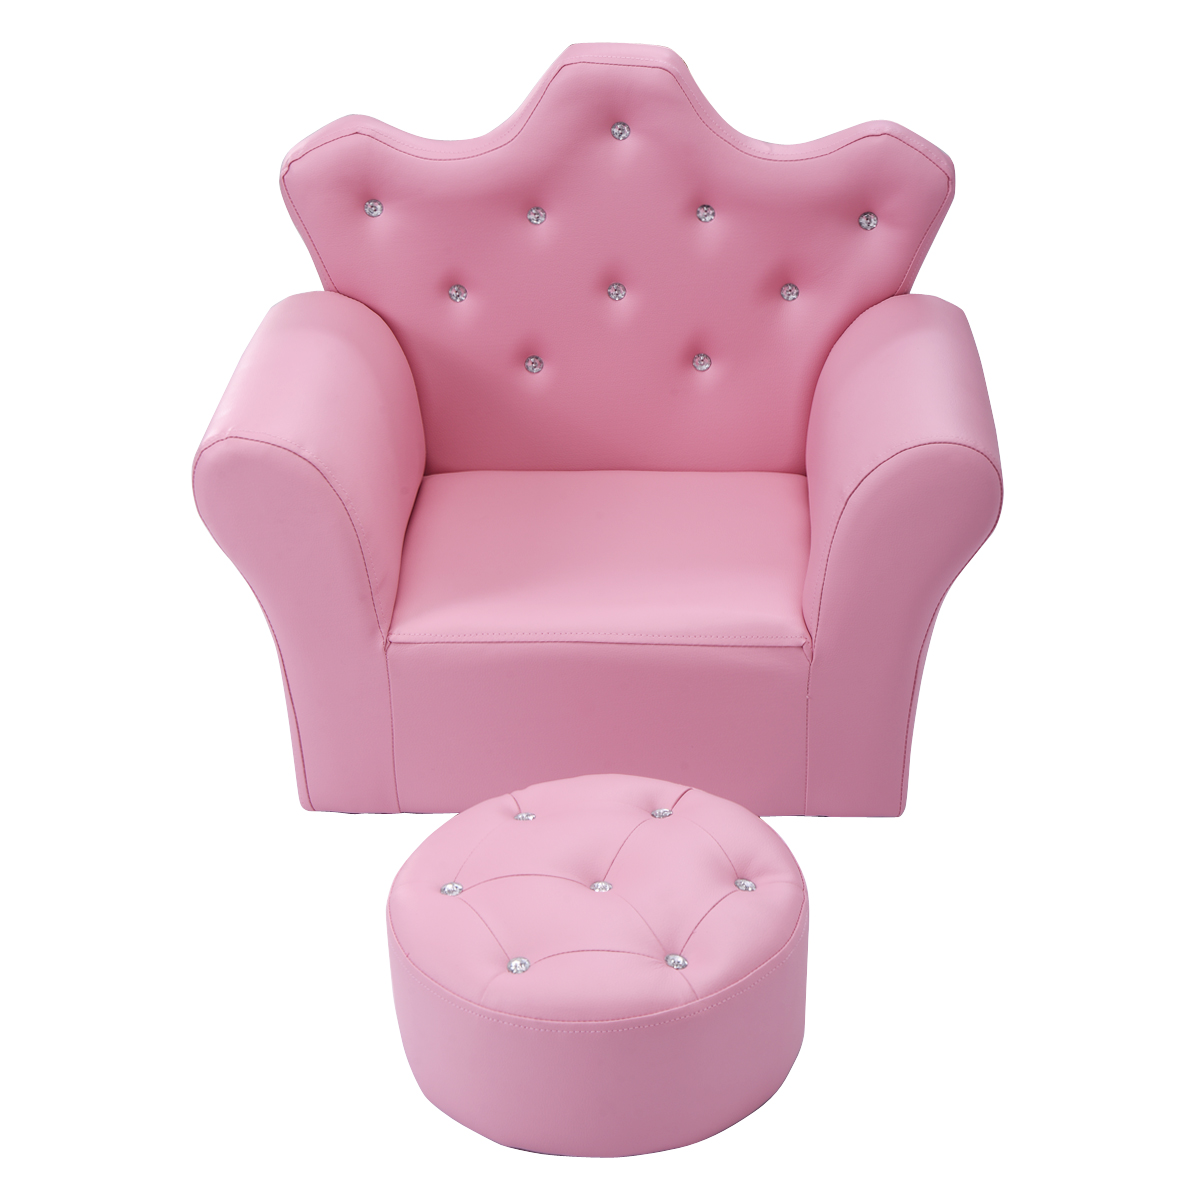 Topbuy Single Sponge Sofa Toddler Children Leisure Chair with Armrest Ottoman Kids Furniture Pink